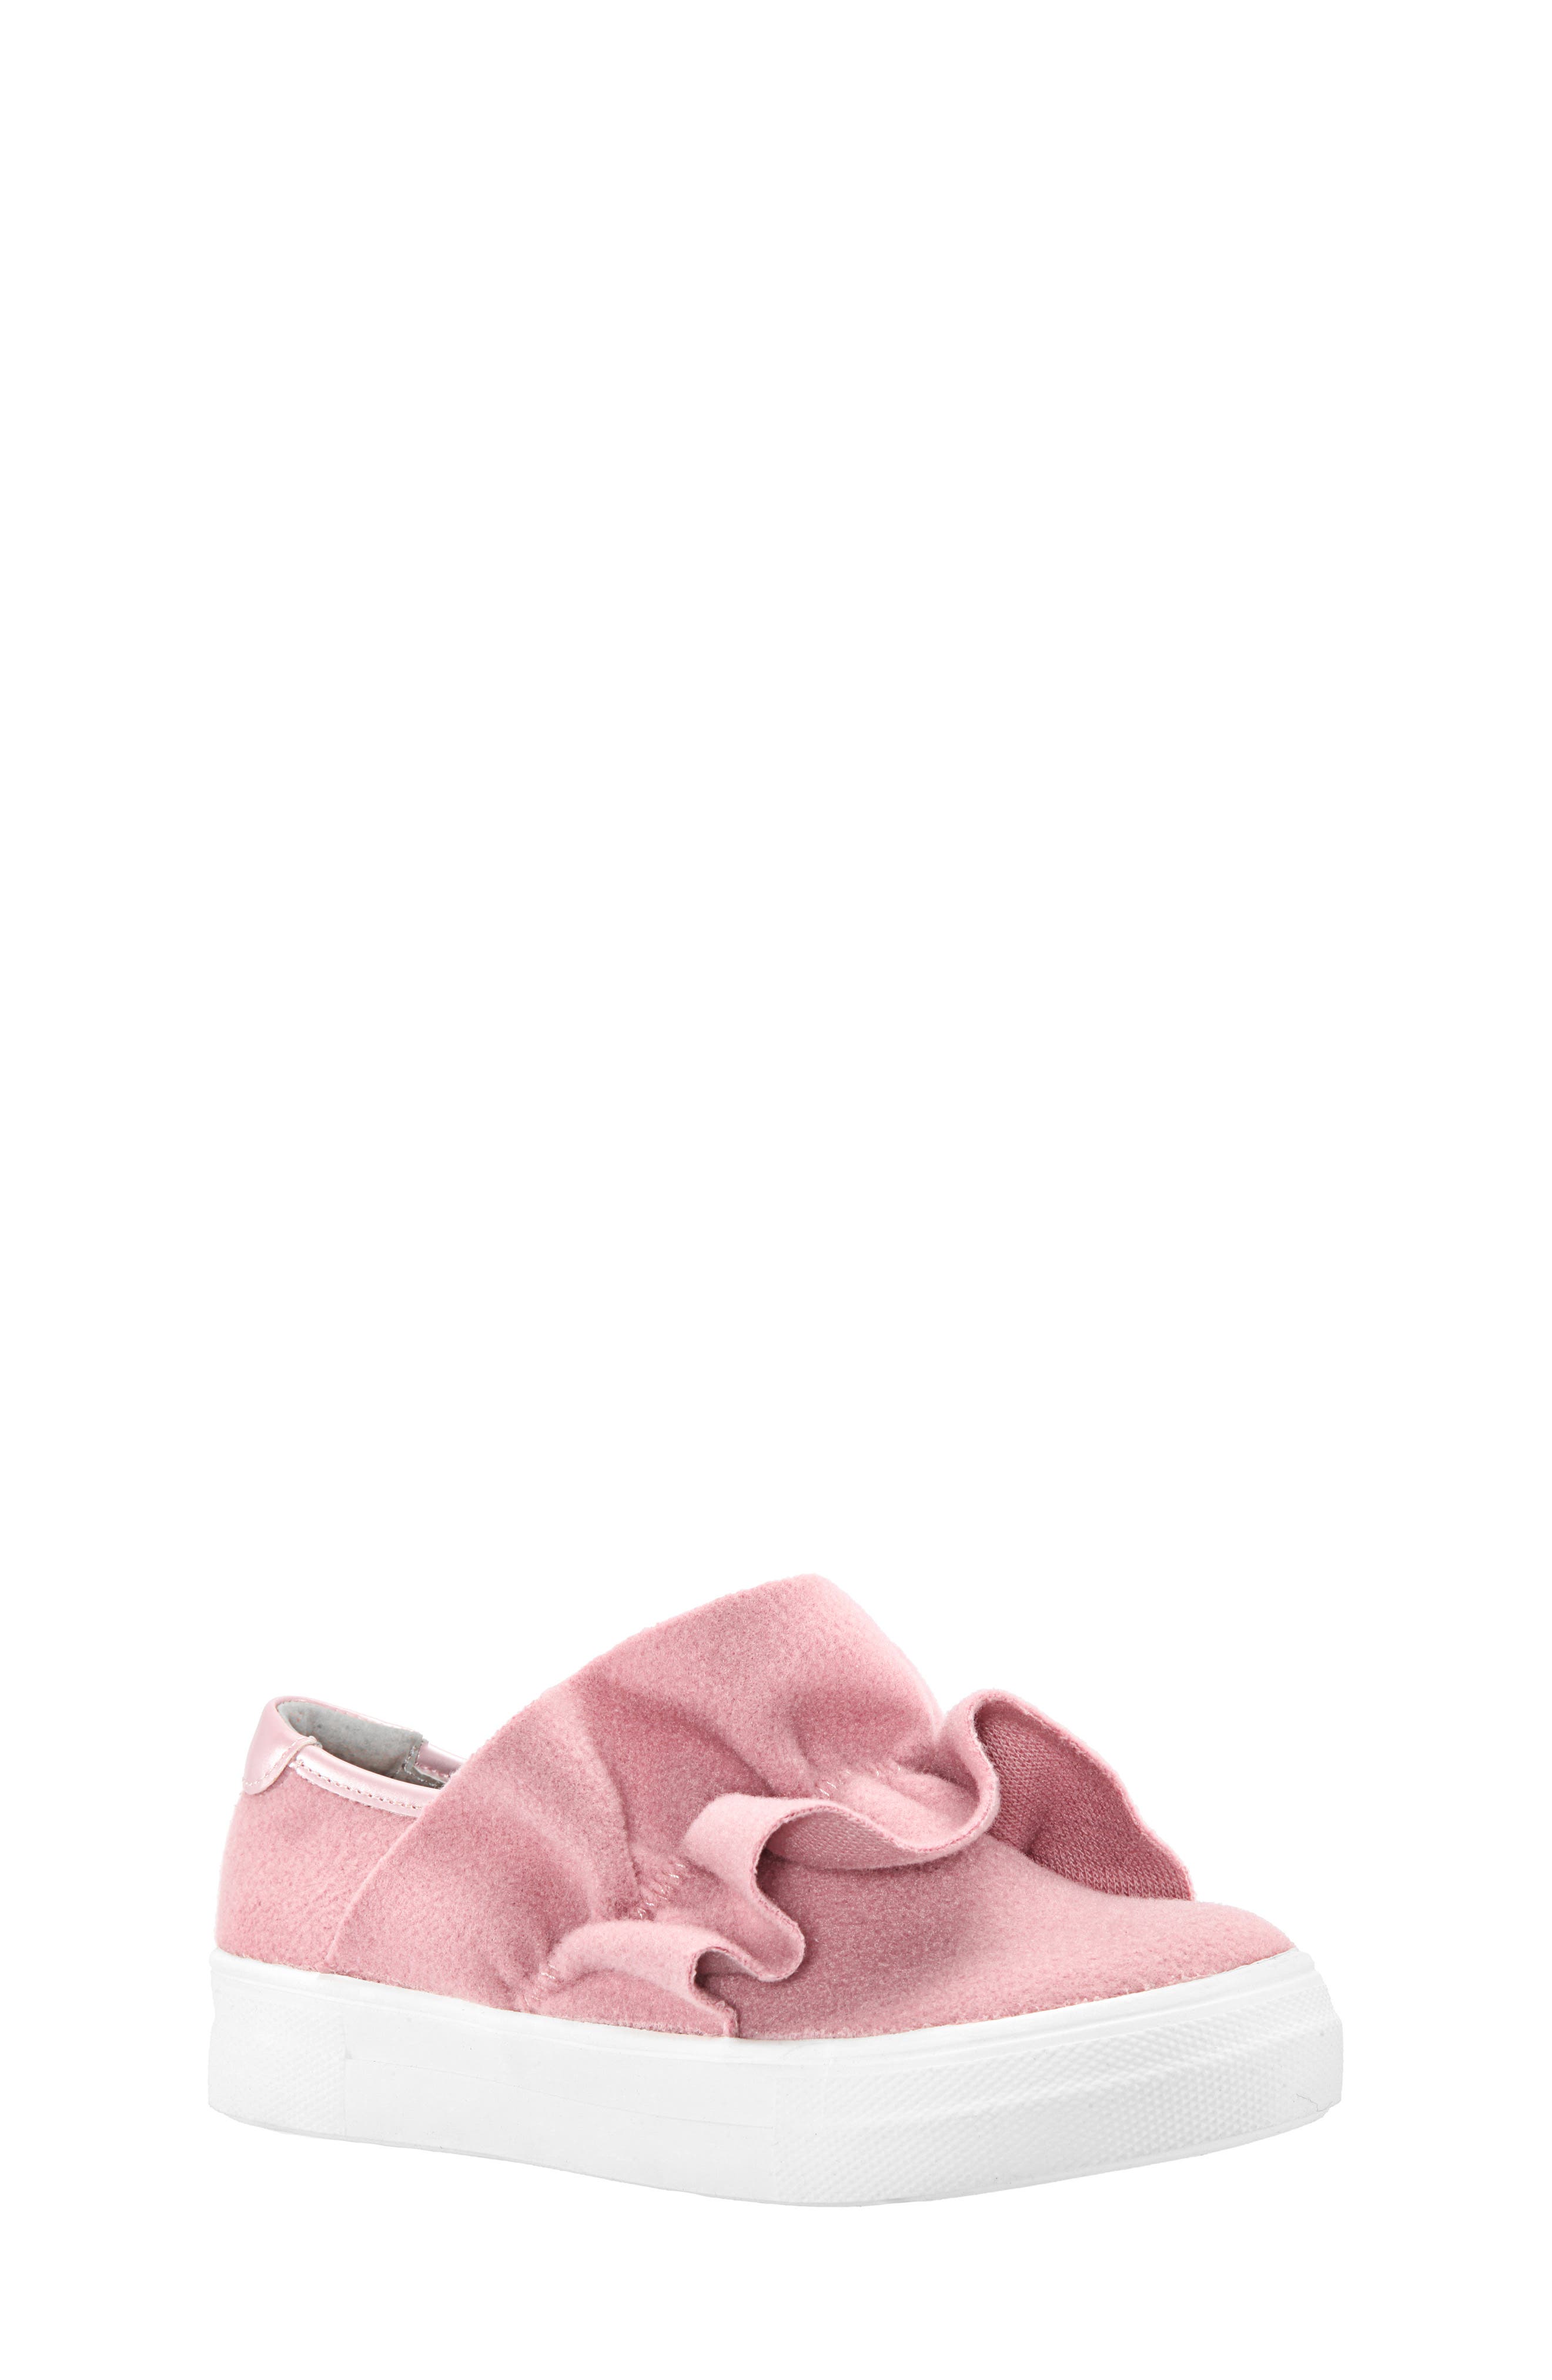 UPC 794378365006 product image for Girl's Nina Ivani Slip-On Sneaker, Size 5 M - Pink | upcitemdb.com